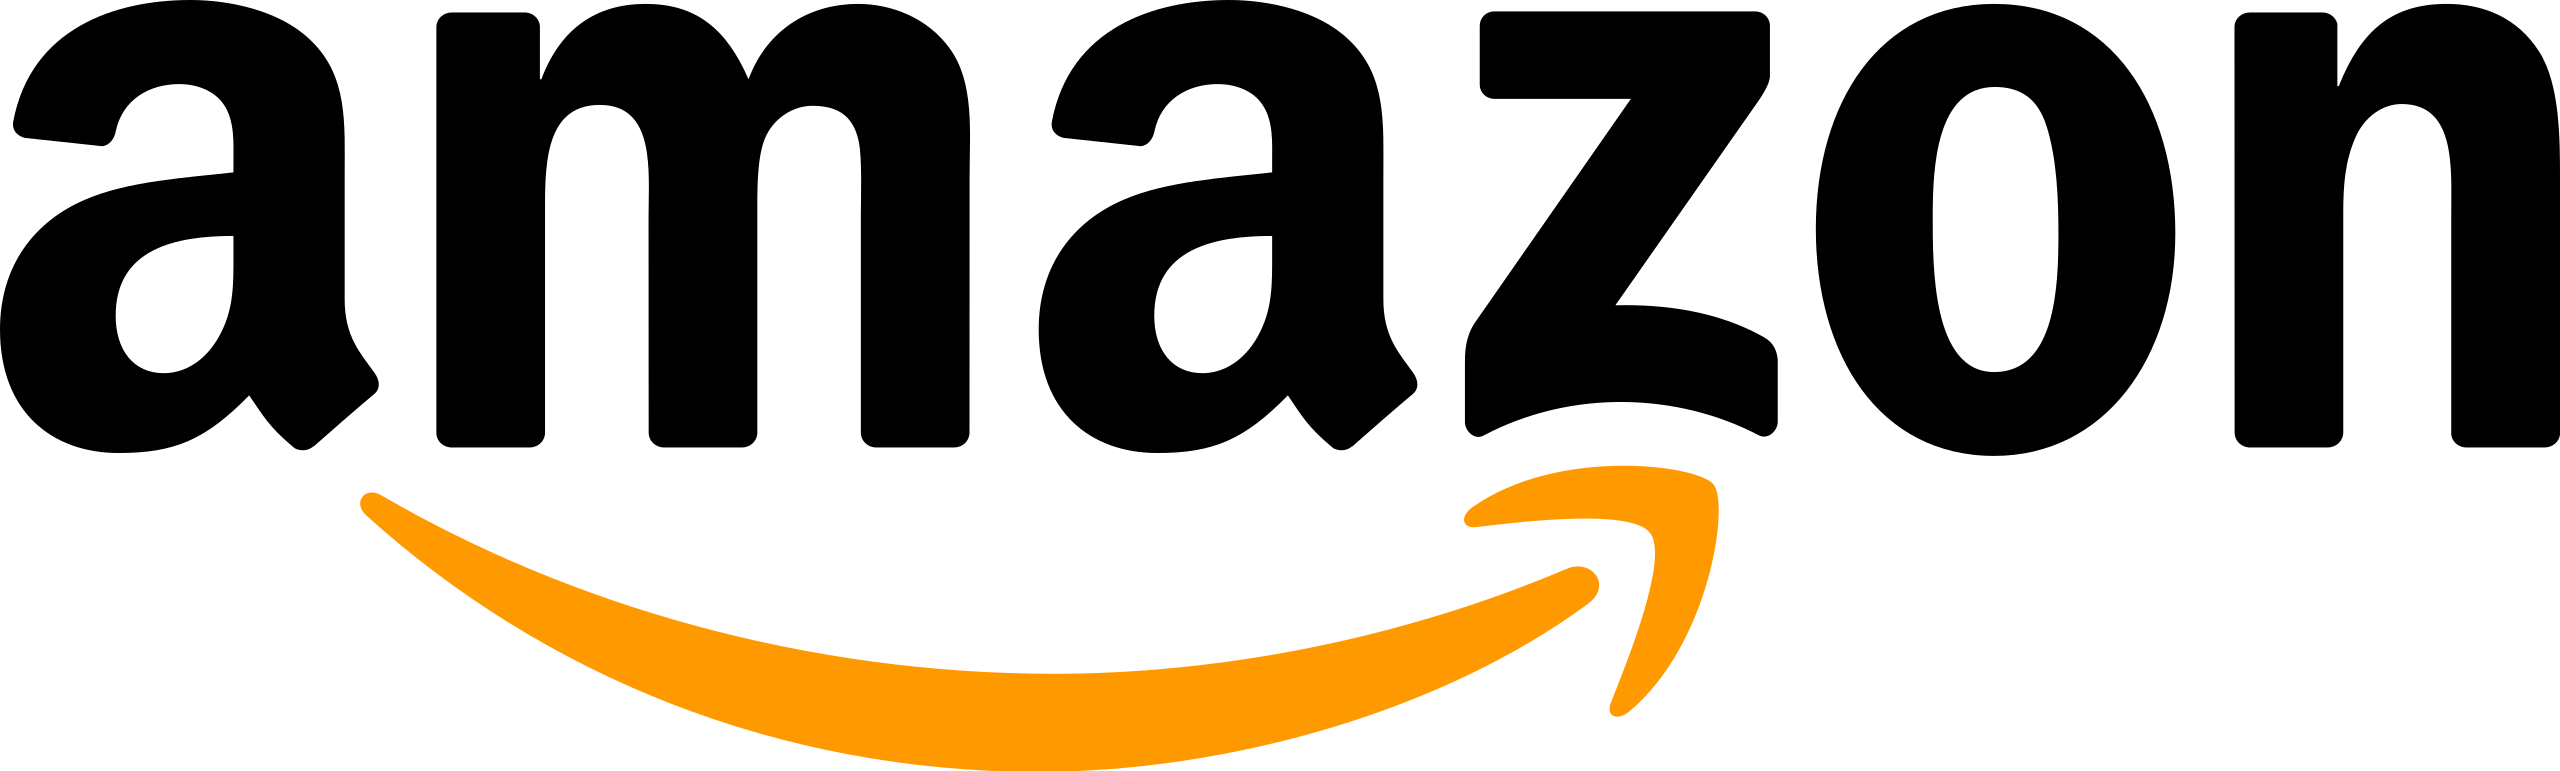 Amazon Logo PNG Photo